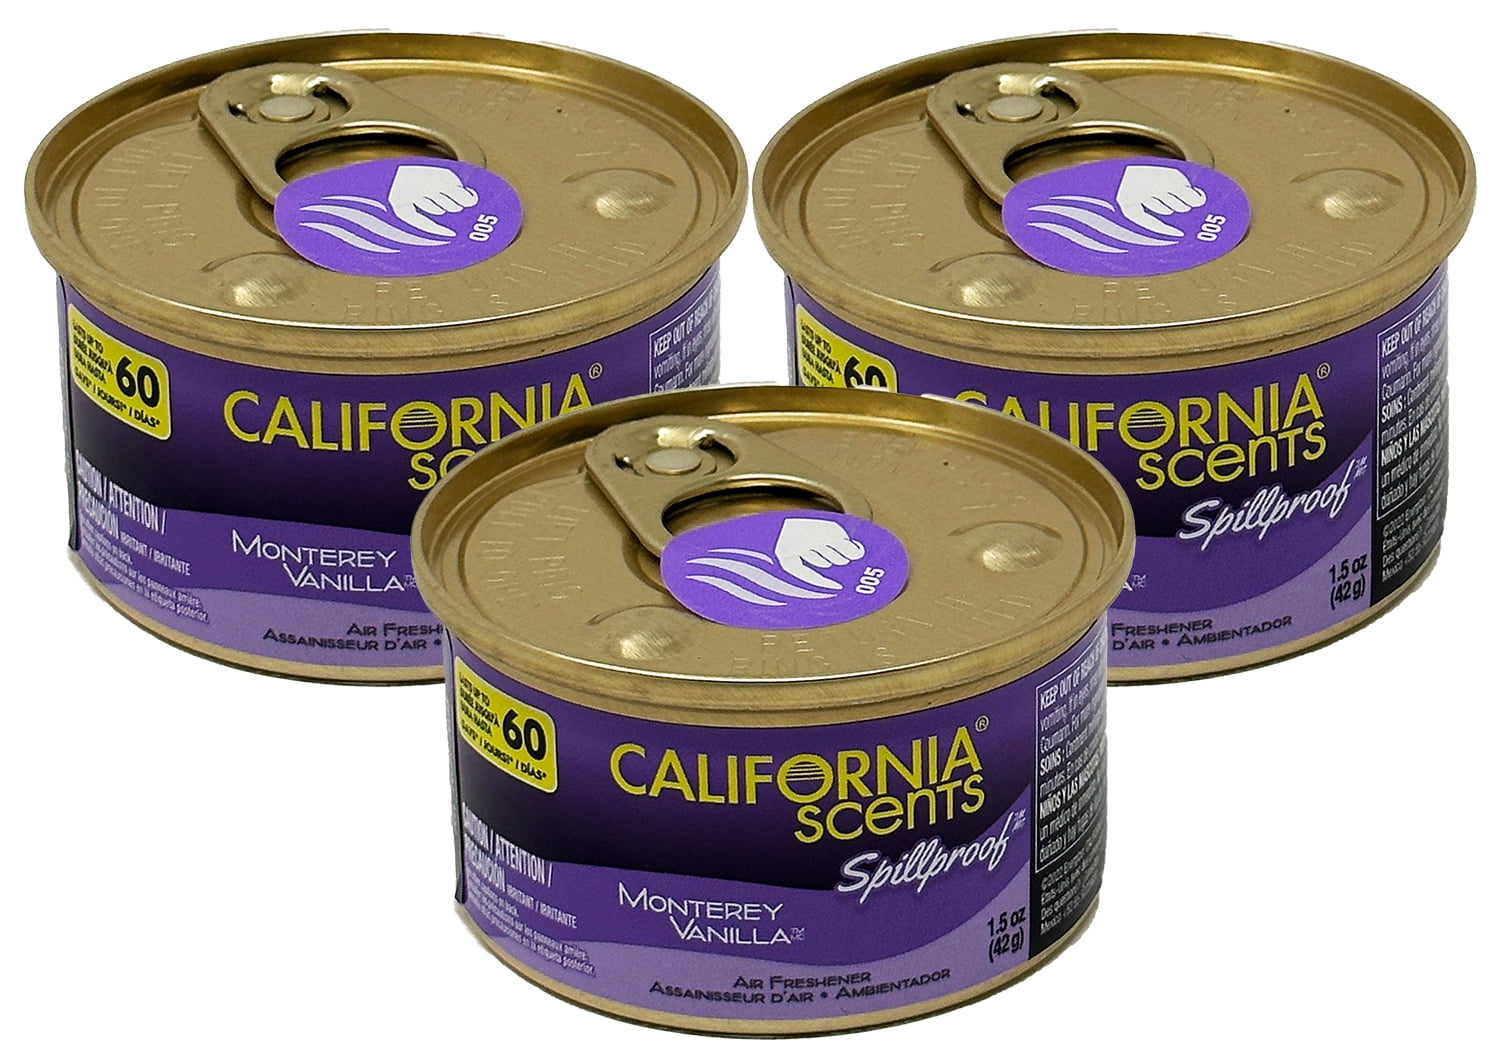 California Scents Car Scents Air Freshener Can Monterey Vanilla